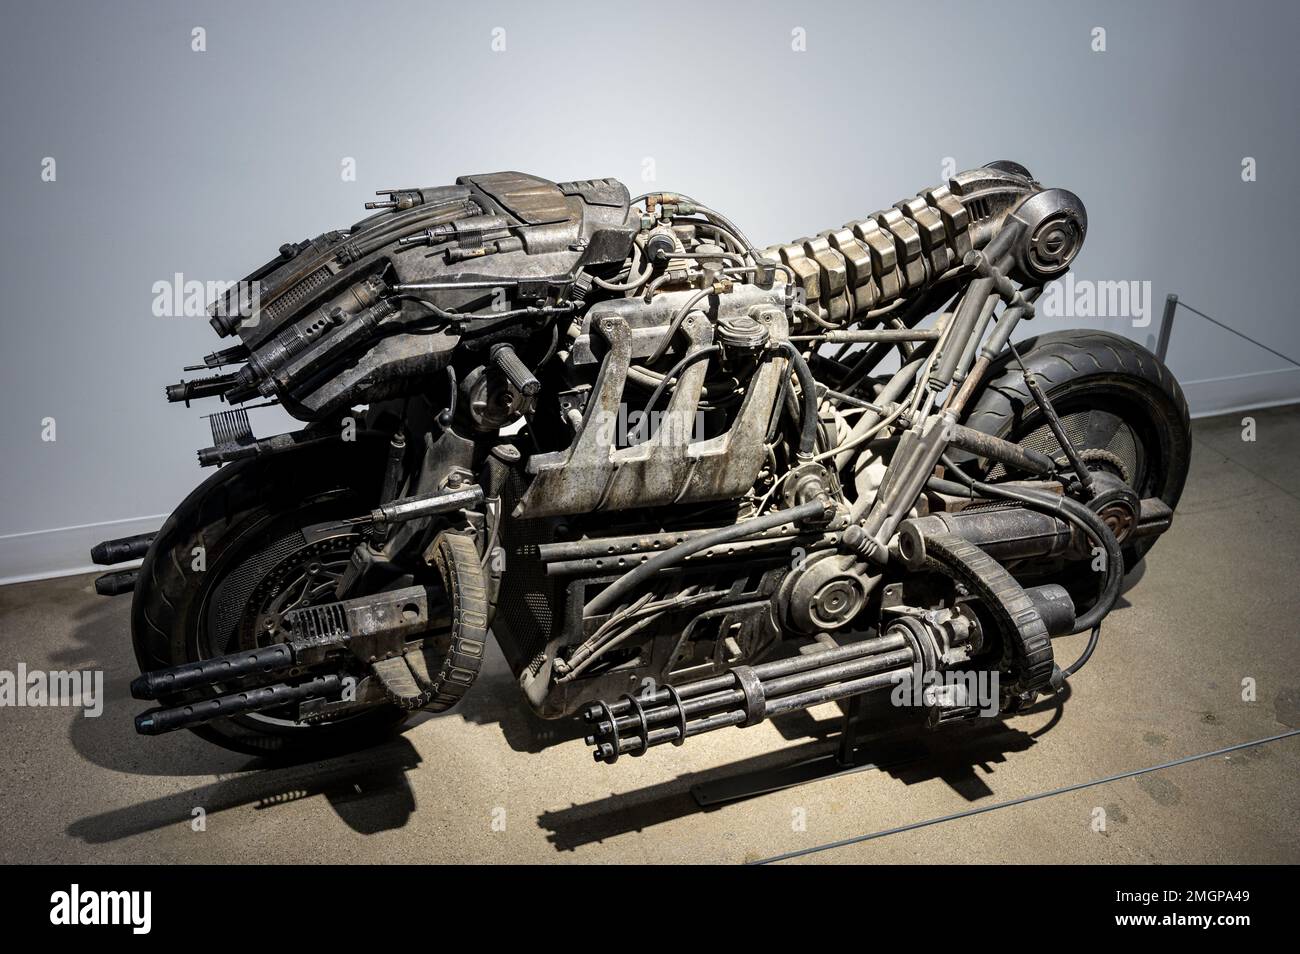 2018 Skynet Moto Terminator motorcycle based on a Ducati Monster 1100s Stock Photo